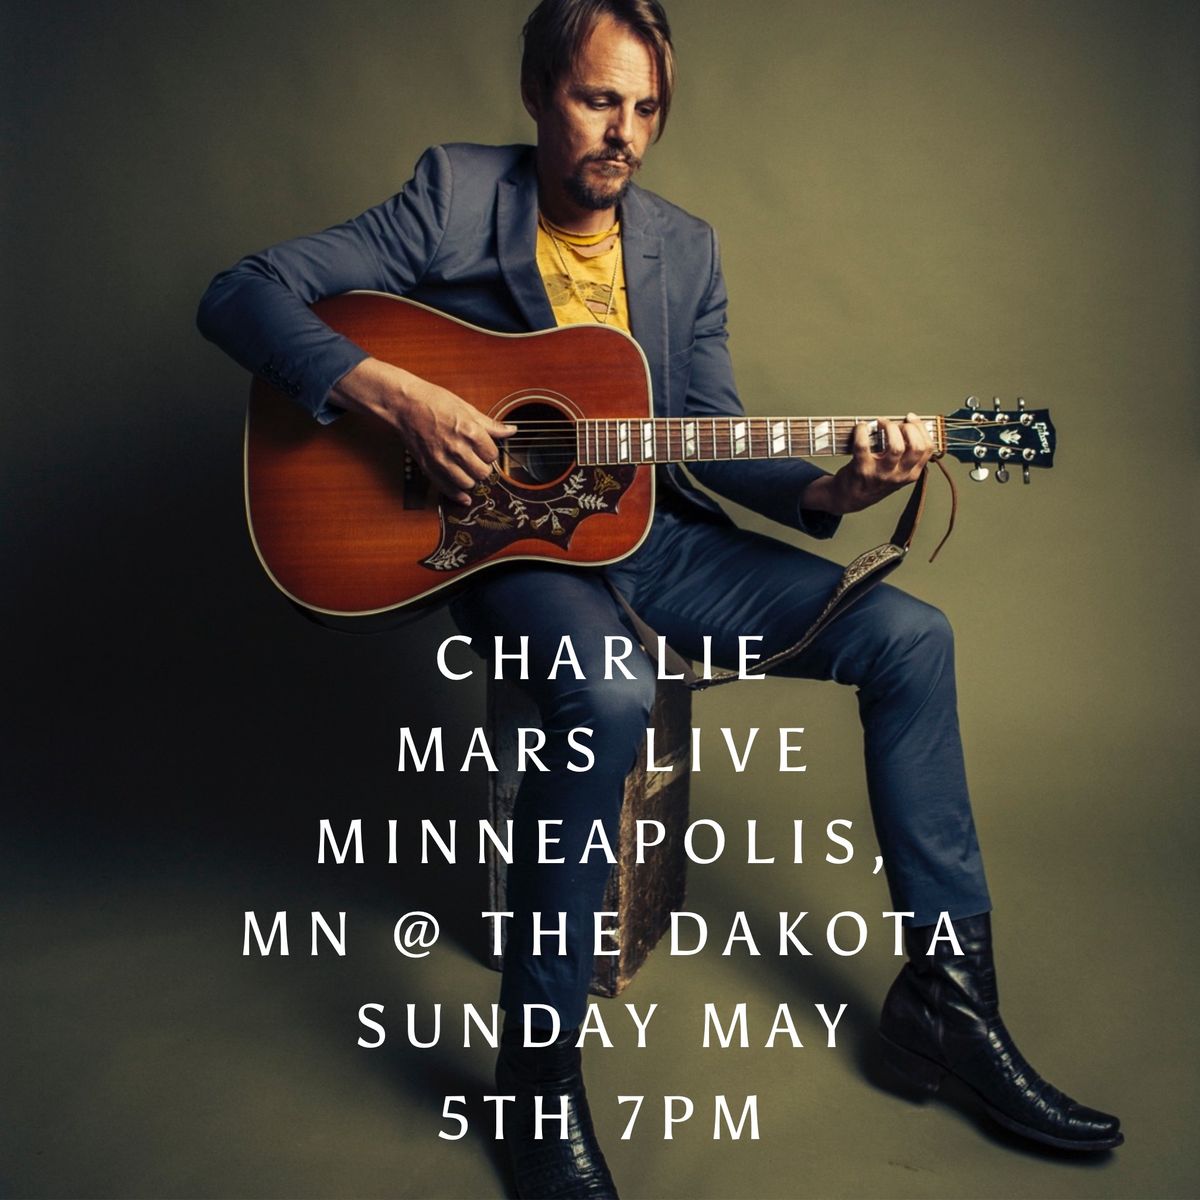 Charlie Mars in Minneapolis at the Dakota